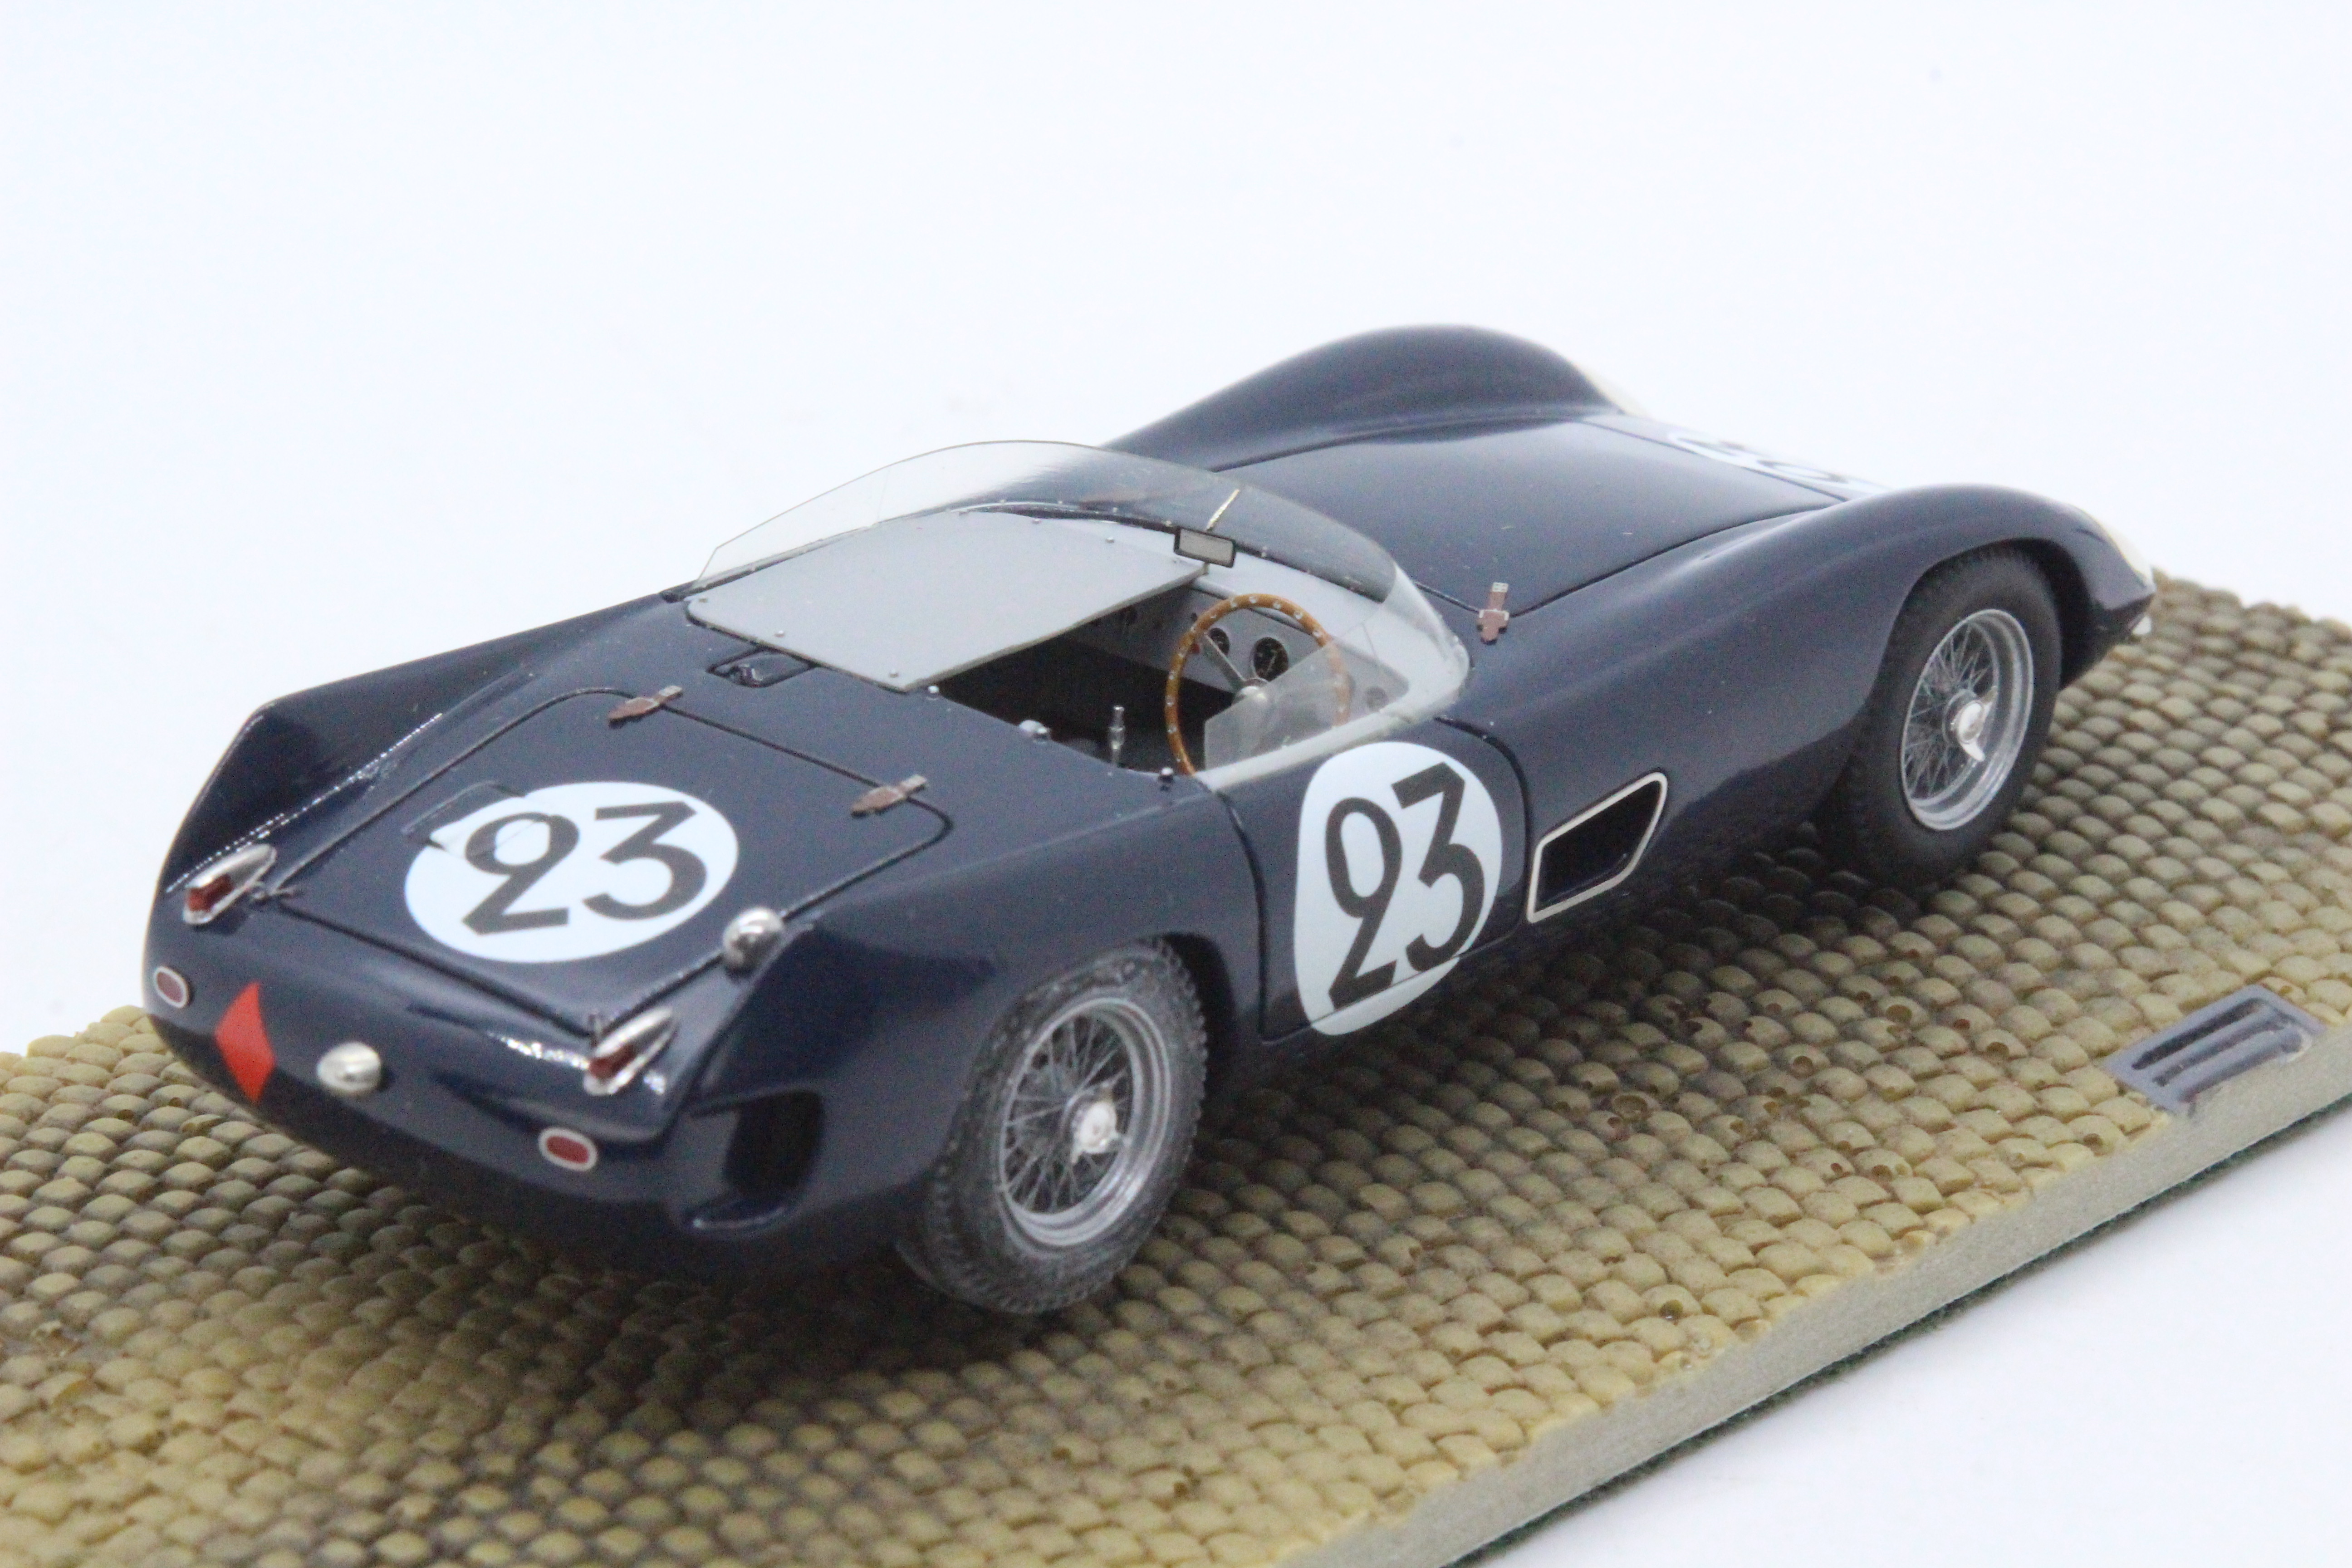 MPH Models, Tim Dyke - A boxed MPH Models #1301 Talbot-Maserati Le Mans 1957. - Image 6 of 8